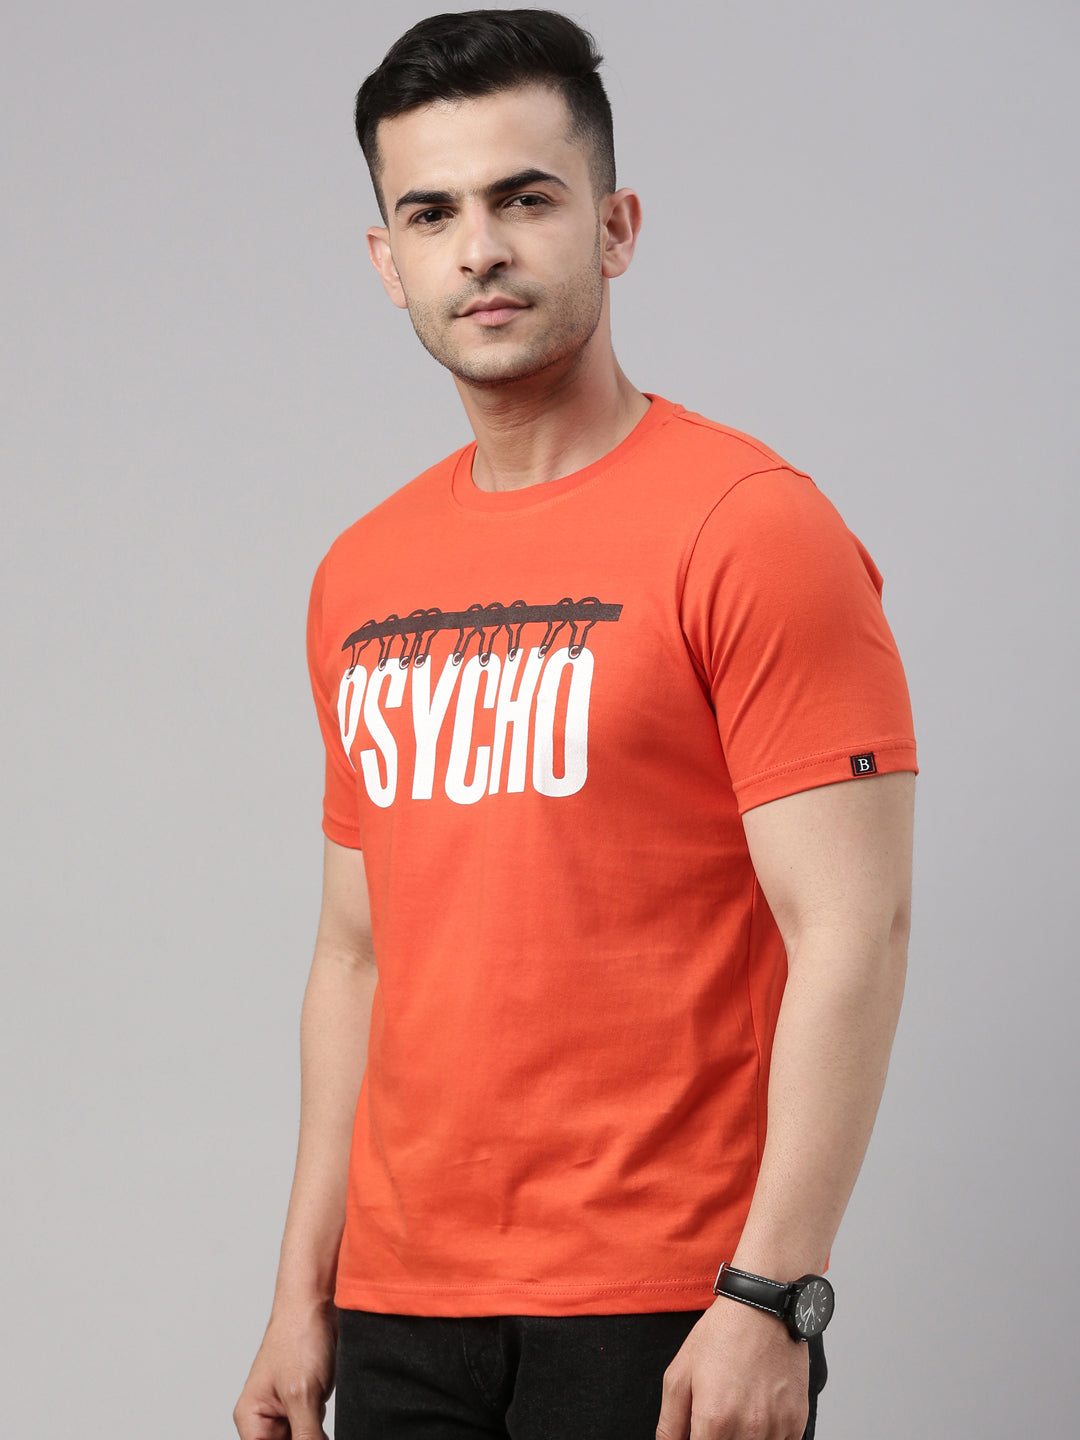 Pscyco T-Shirt Graphic T-Shirts Bushirt   